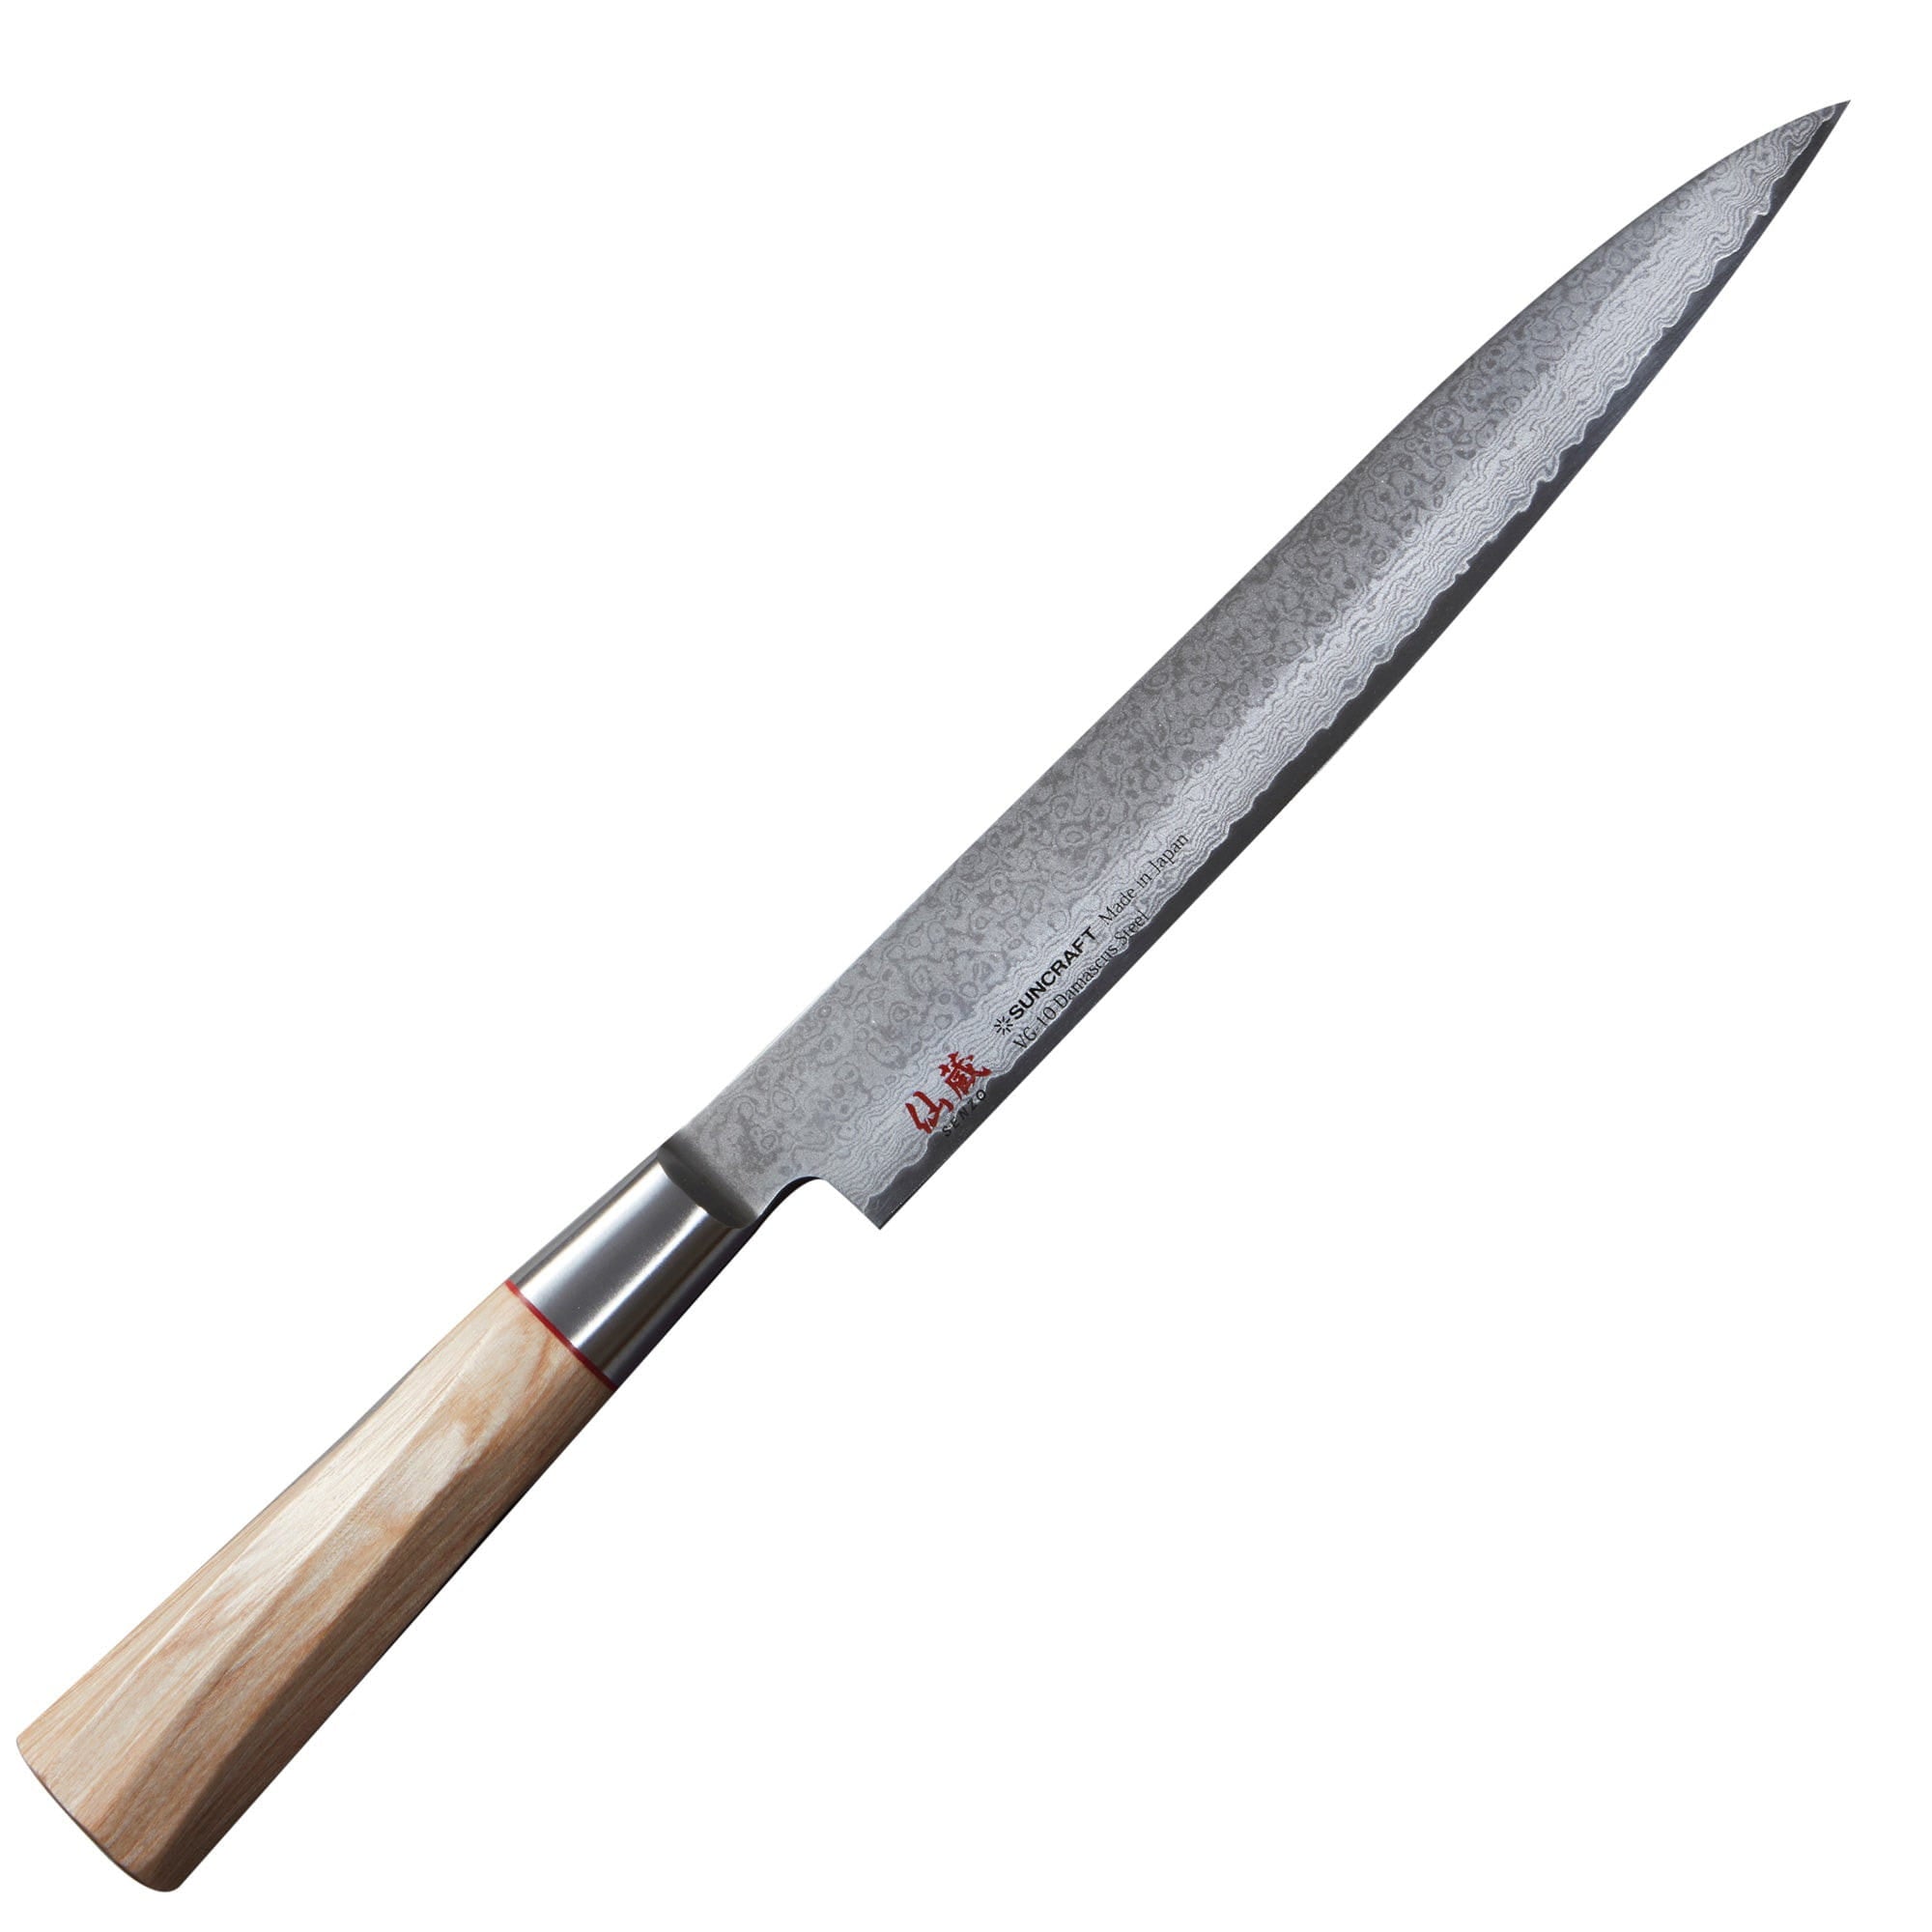 Senzo til 07 Sashimi kniv, 21 cm